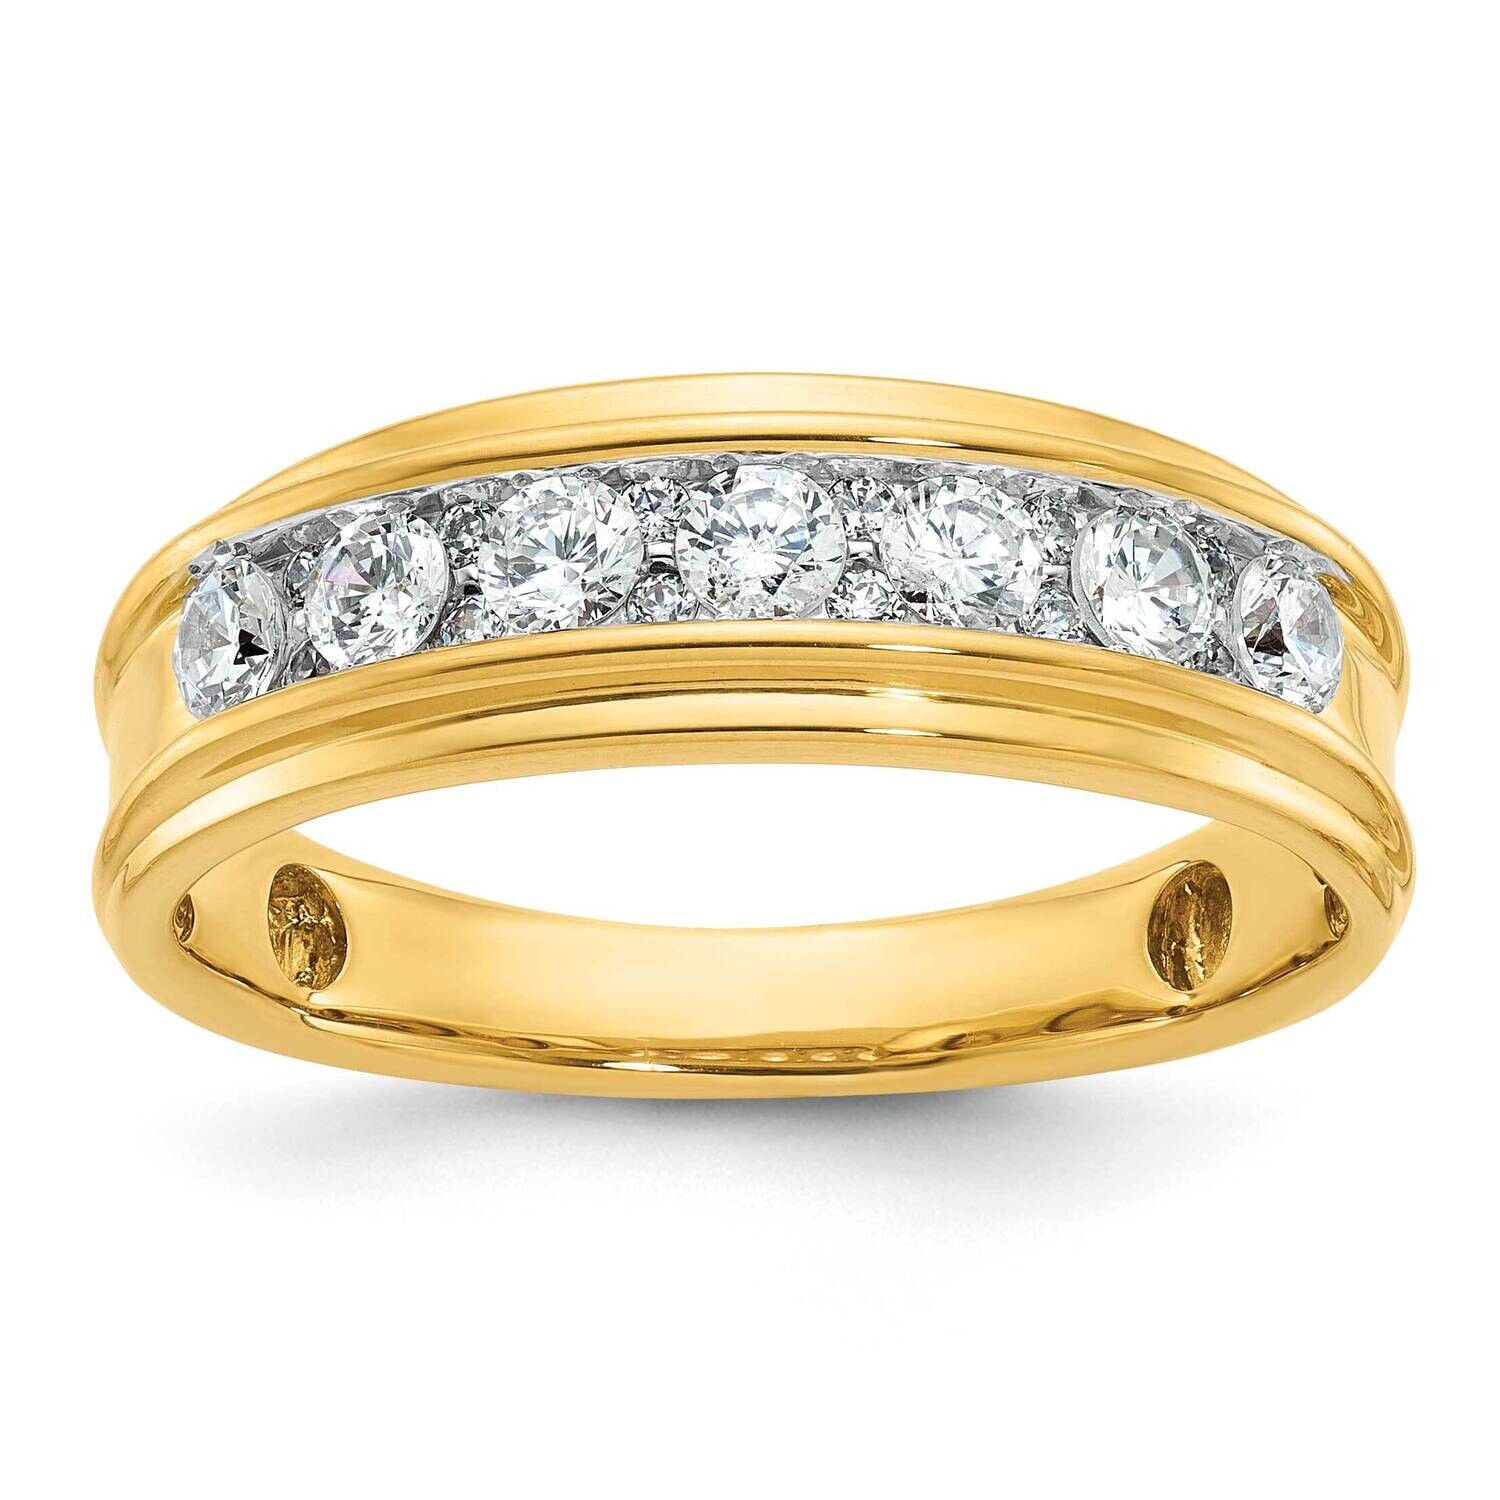 Ibgoodman Men's Polished 7/8 Carat Aa Quality Diamond Ring 14k Gold B64225-4YAA